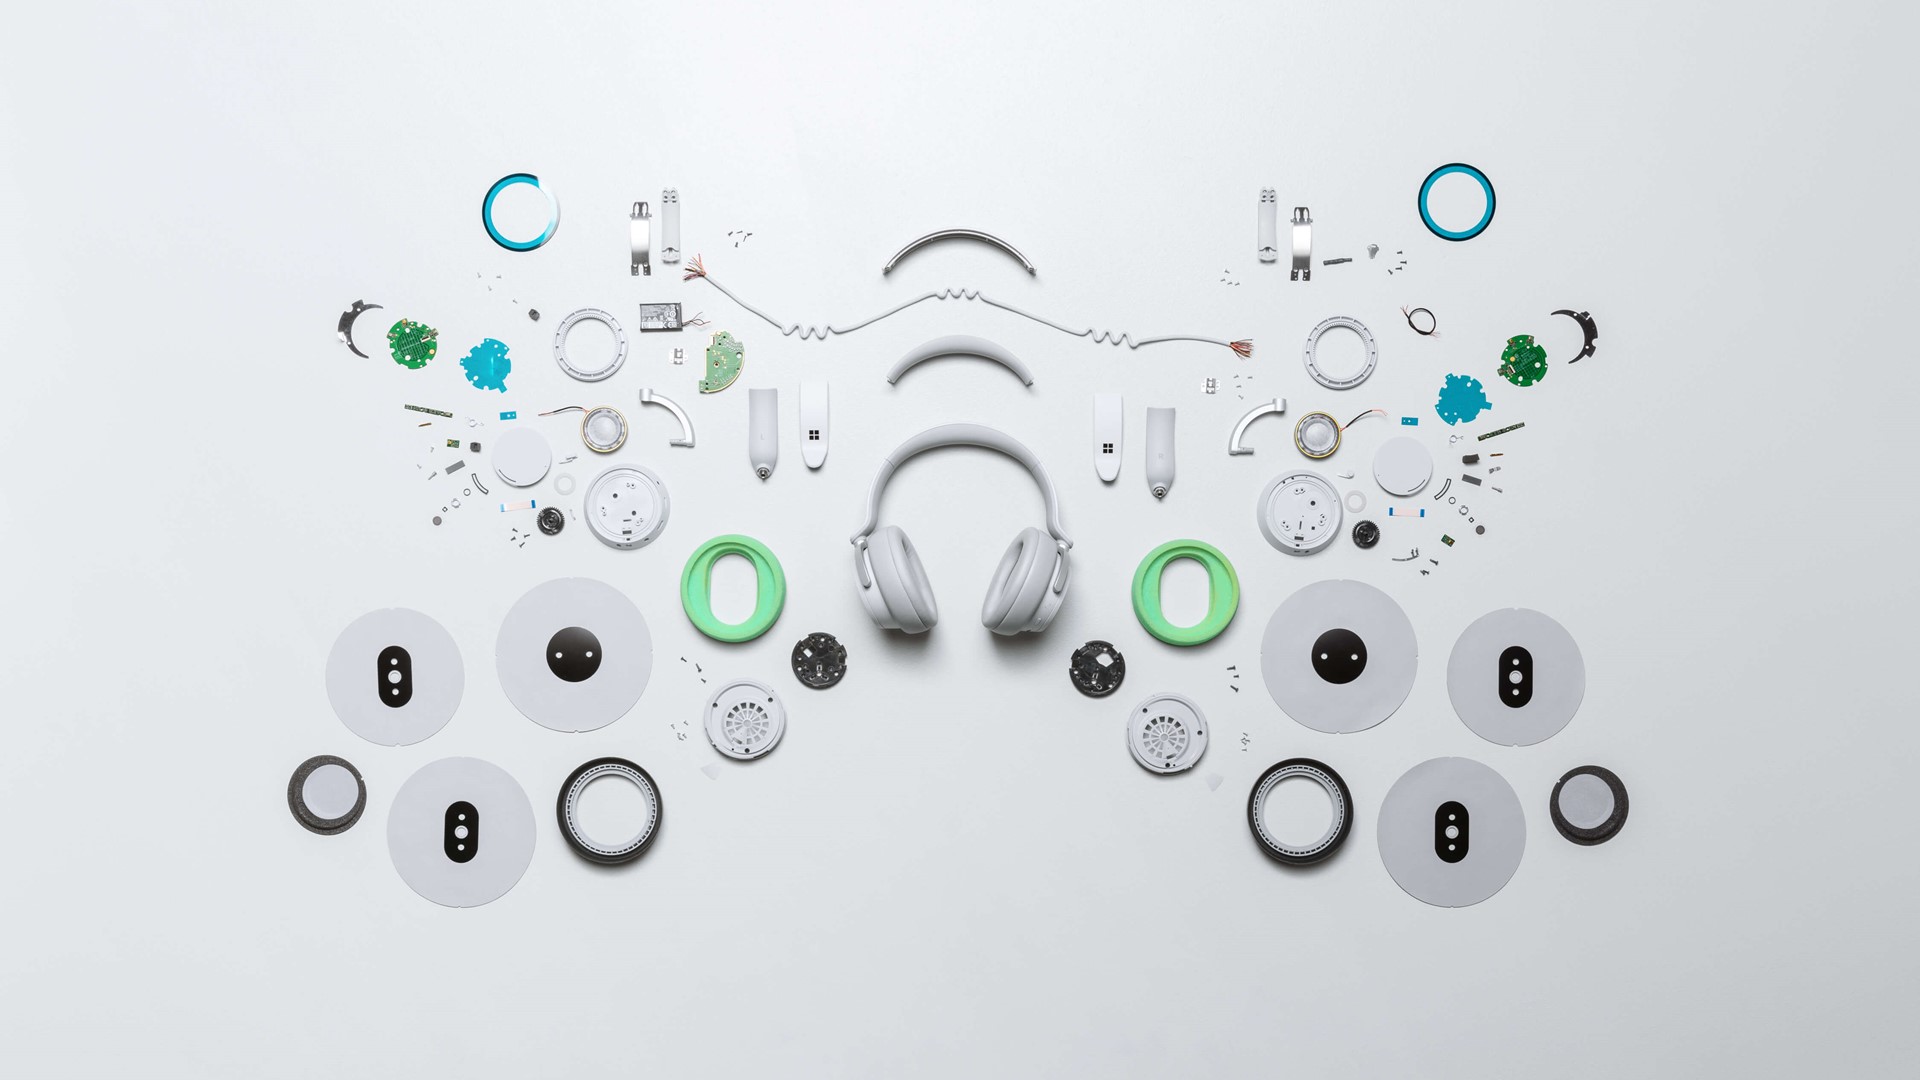 surface-headphones